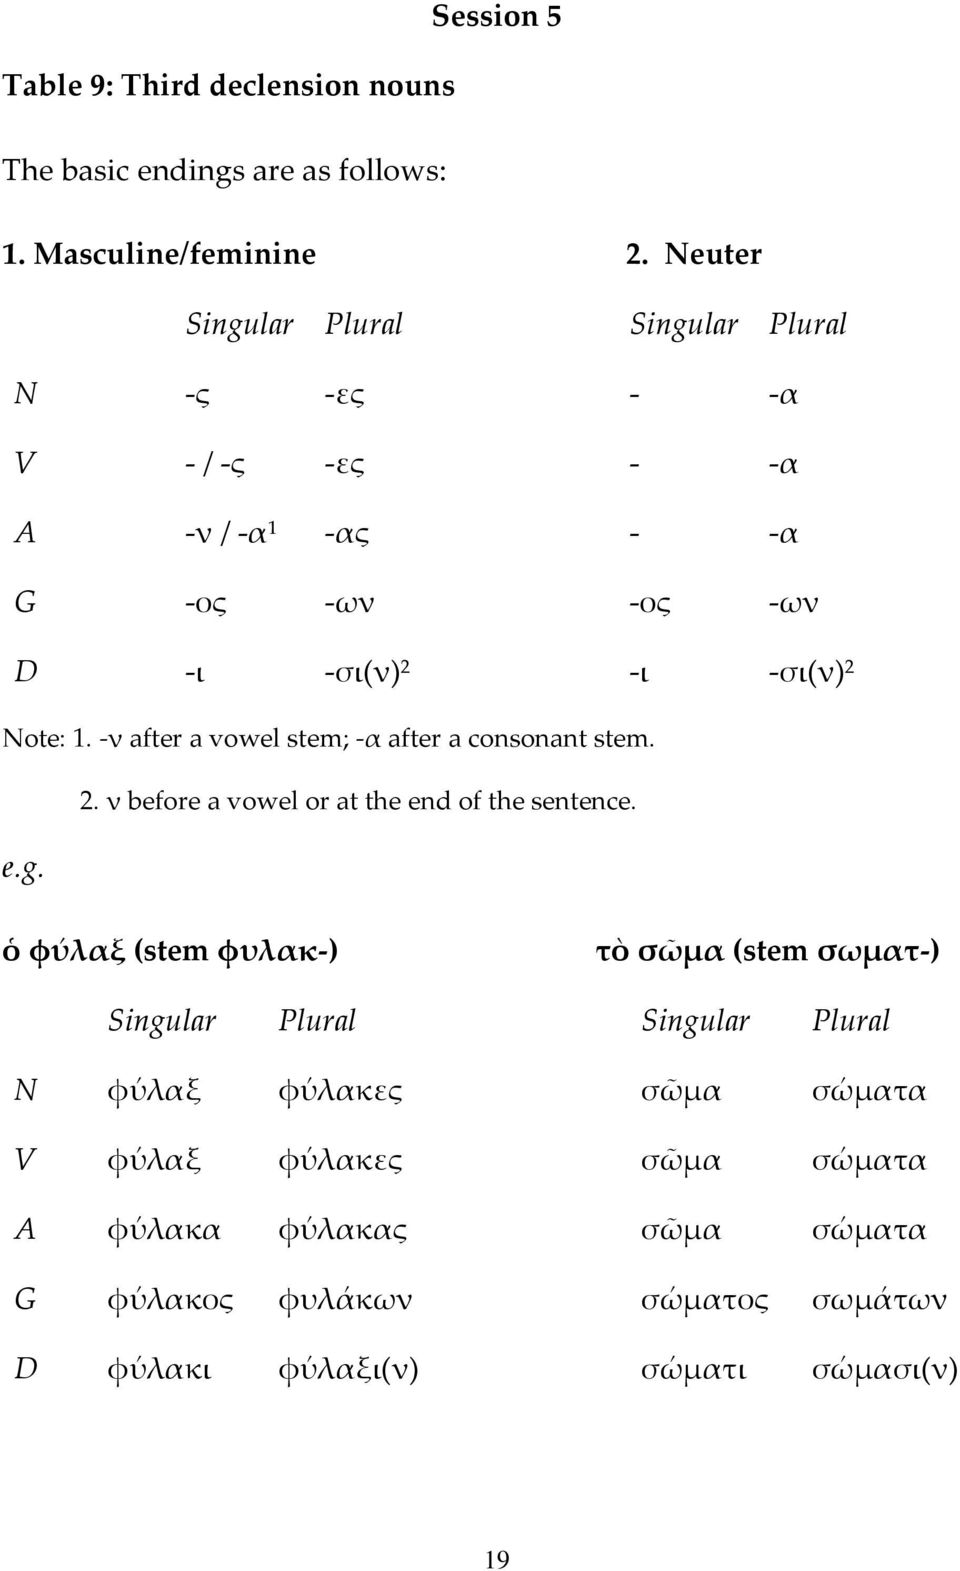 Neuter Singular Plural - -α - -α - -α G -ος -ων -ος -ων D -ι -σι(ν) 2 -ι -σι(ν) 2 Note: 1. -ν after a vowel stem; -α after a consonant stem. e.g. 2. ν before a vowel or at the end of the sentence.